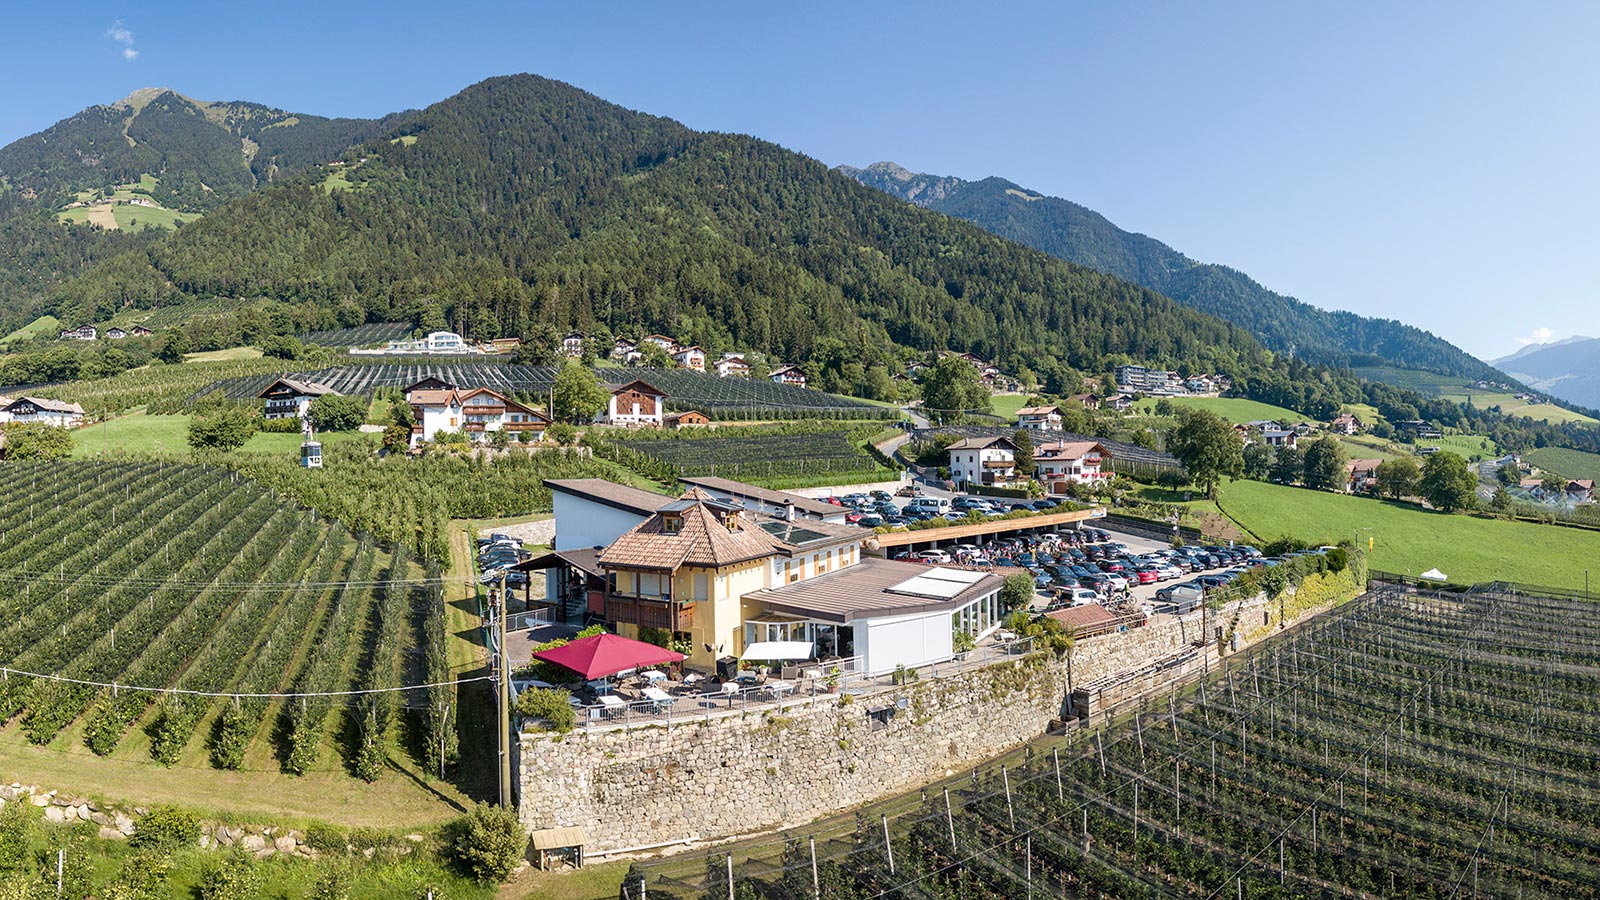 Ristorante Seilbahn Dorf Tirol visto dall'alto, sullo sfondo dei vigneti